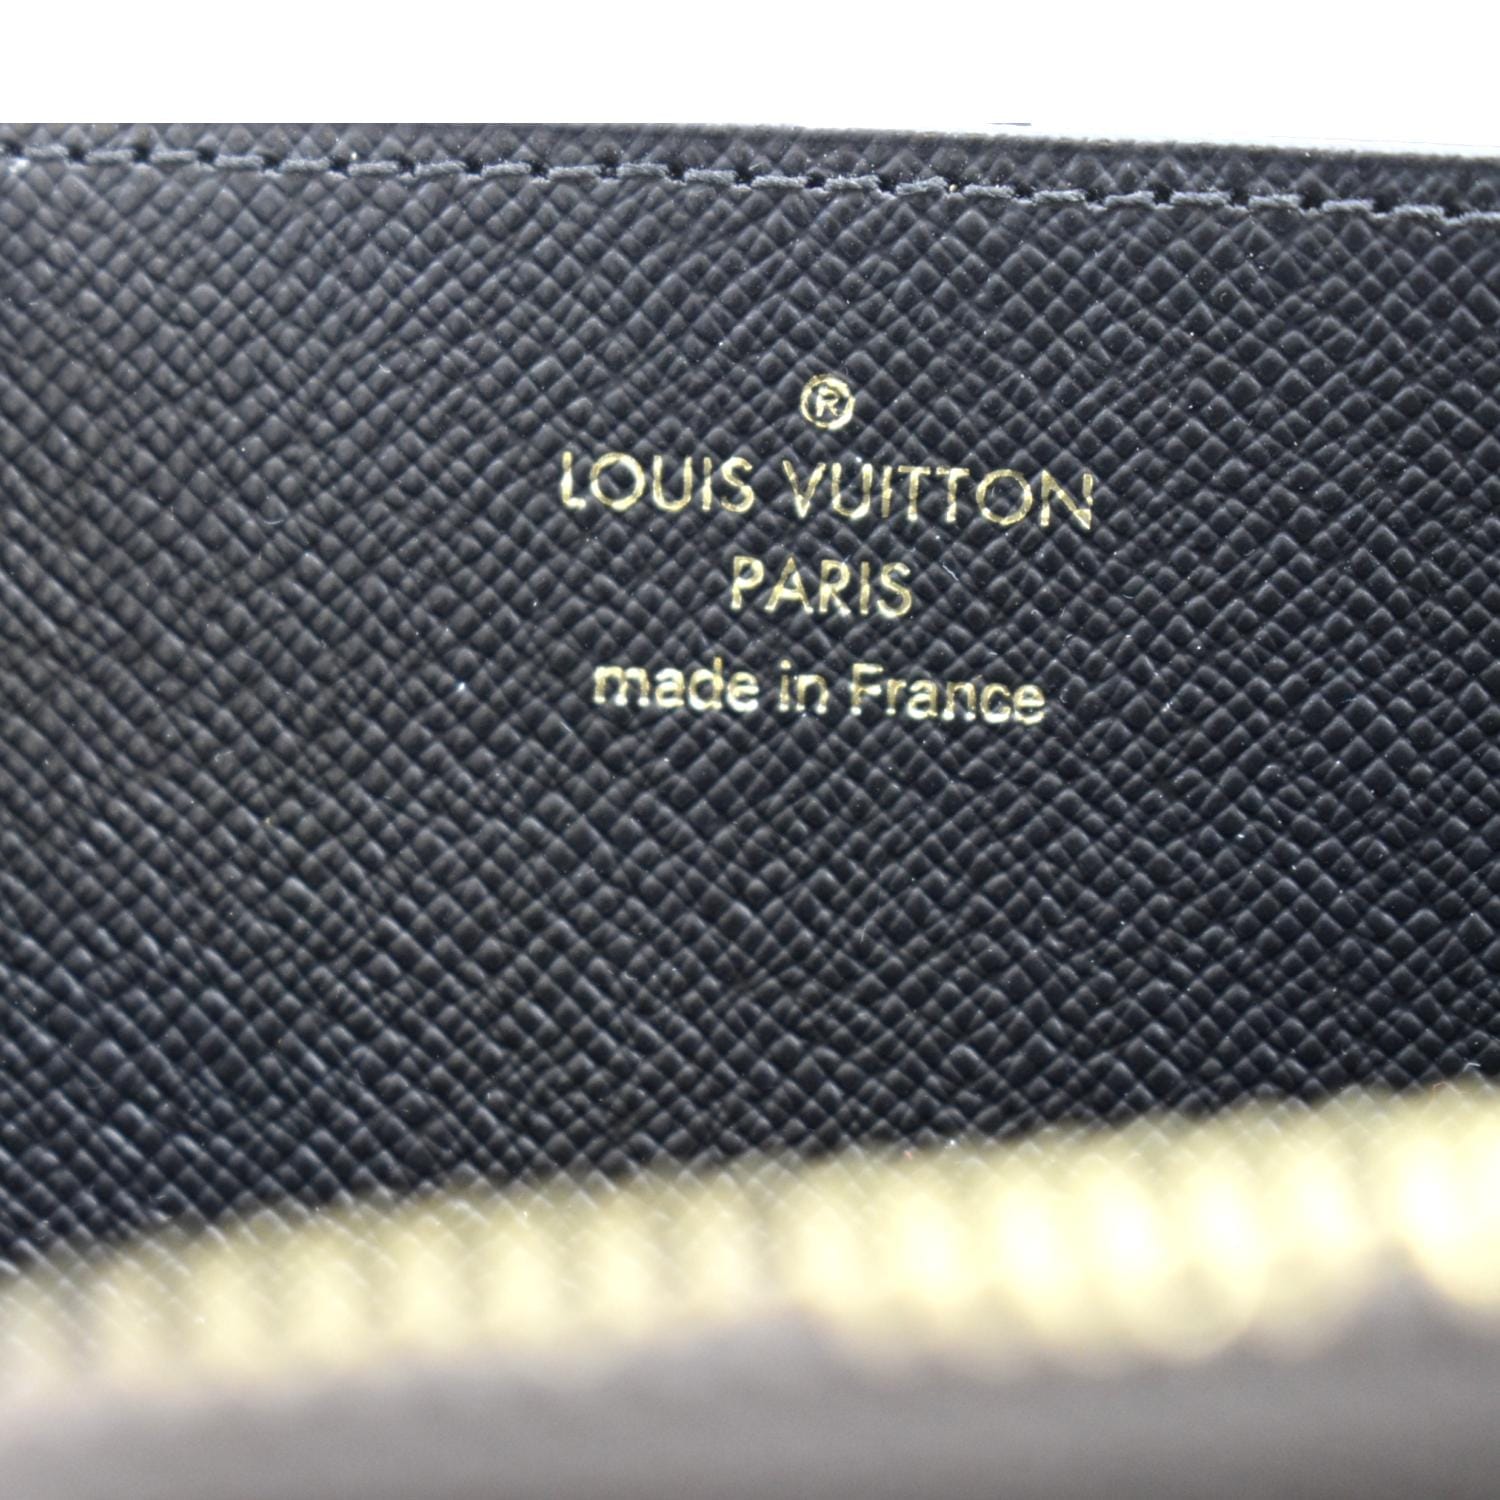 Louis Vuitton Zippy Wallet Monogram Giant Red/Pink in Coated